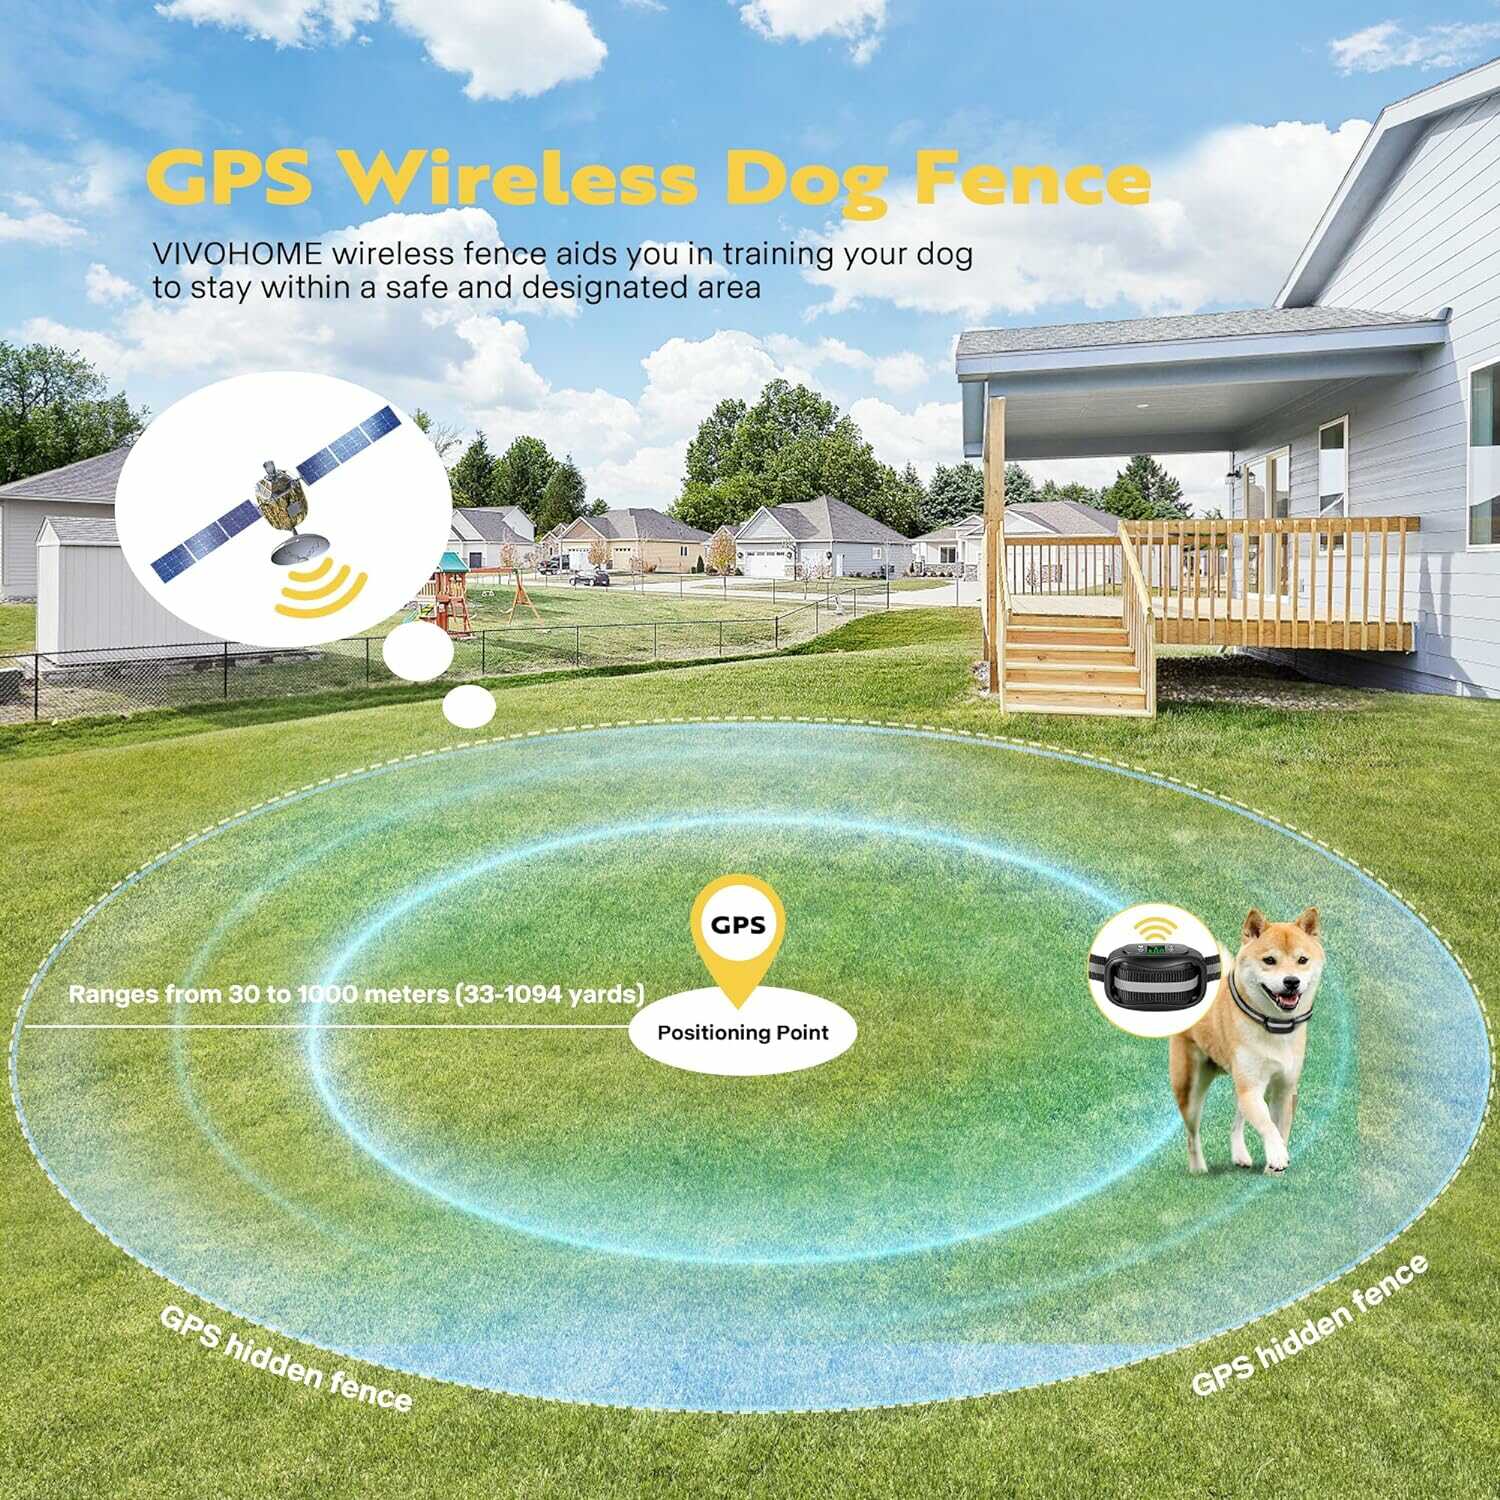 VIVOHOME GPS Wireless Dog Fence